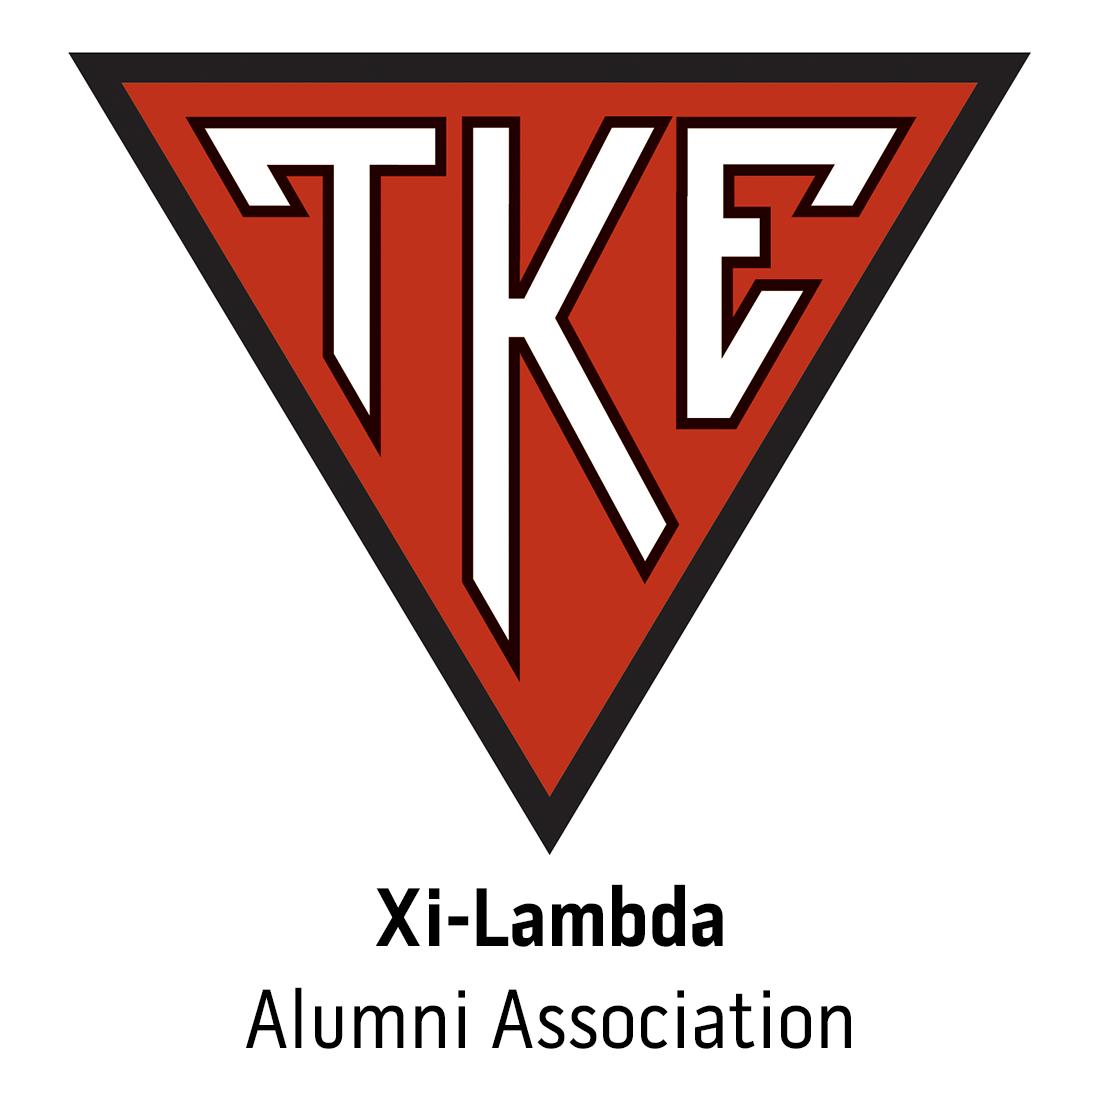 Xi-Lambda Alumni Association at University of Georgia